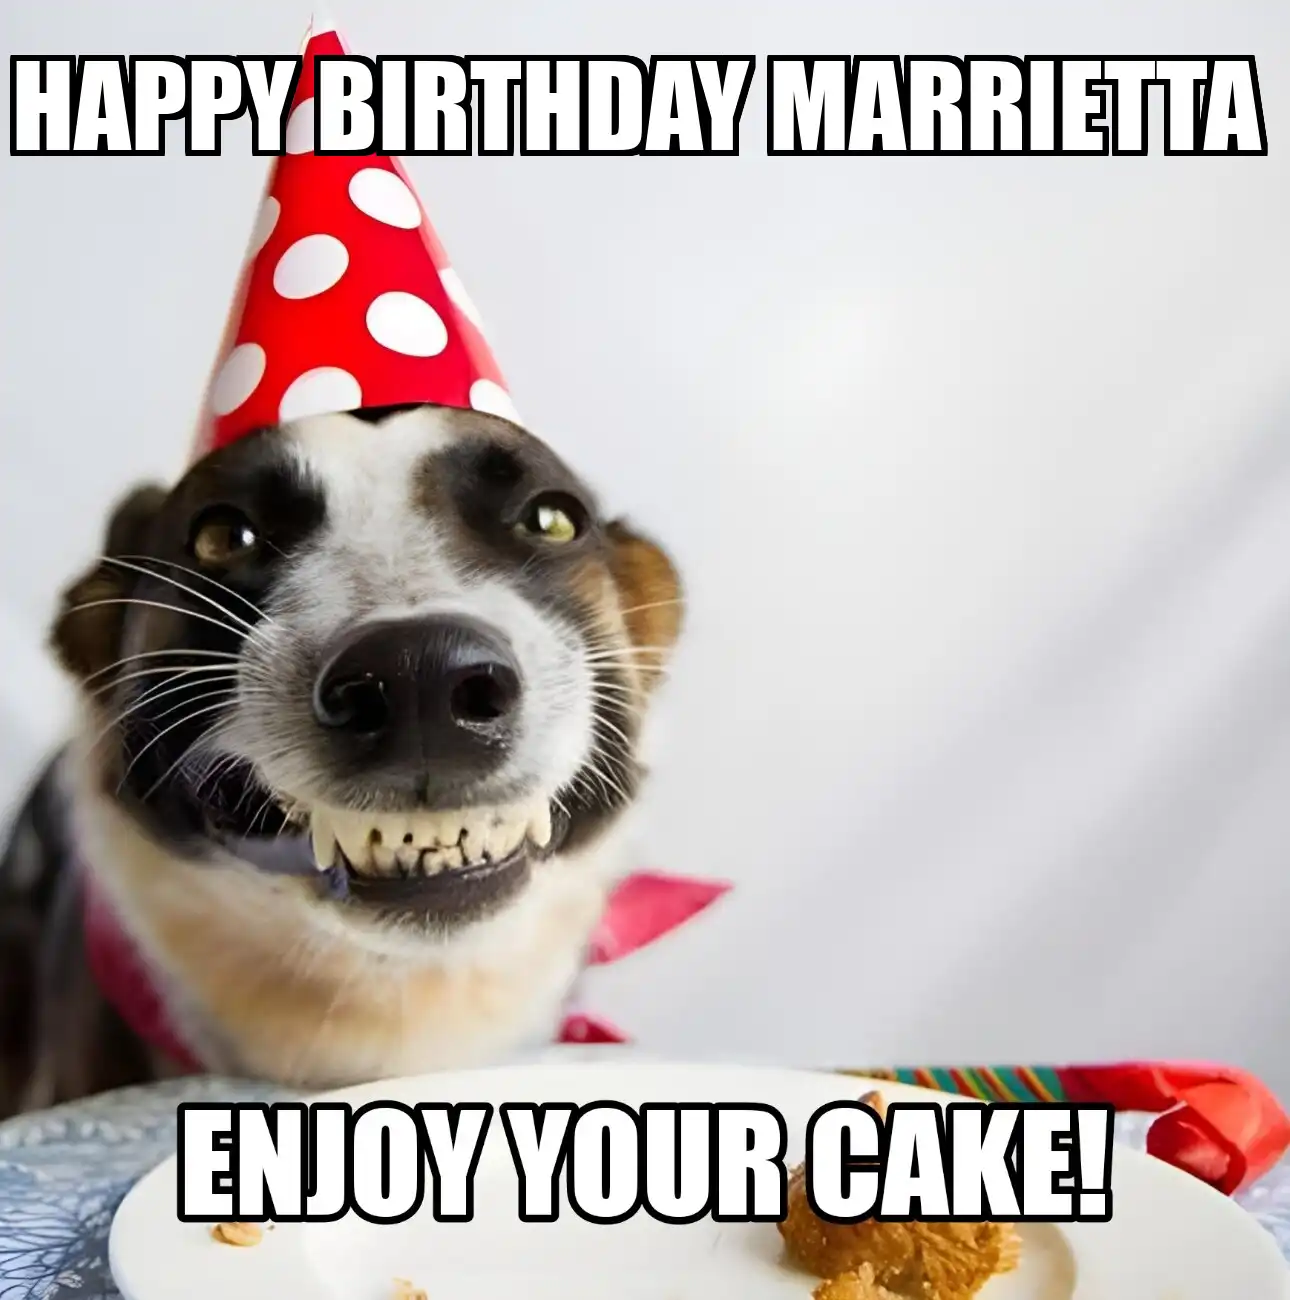 Happy Birthday Marrietta Enjoy Your Cake Dog Meme